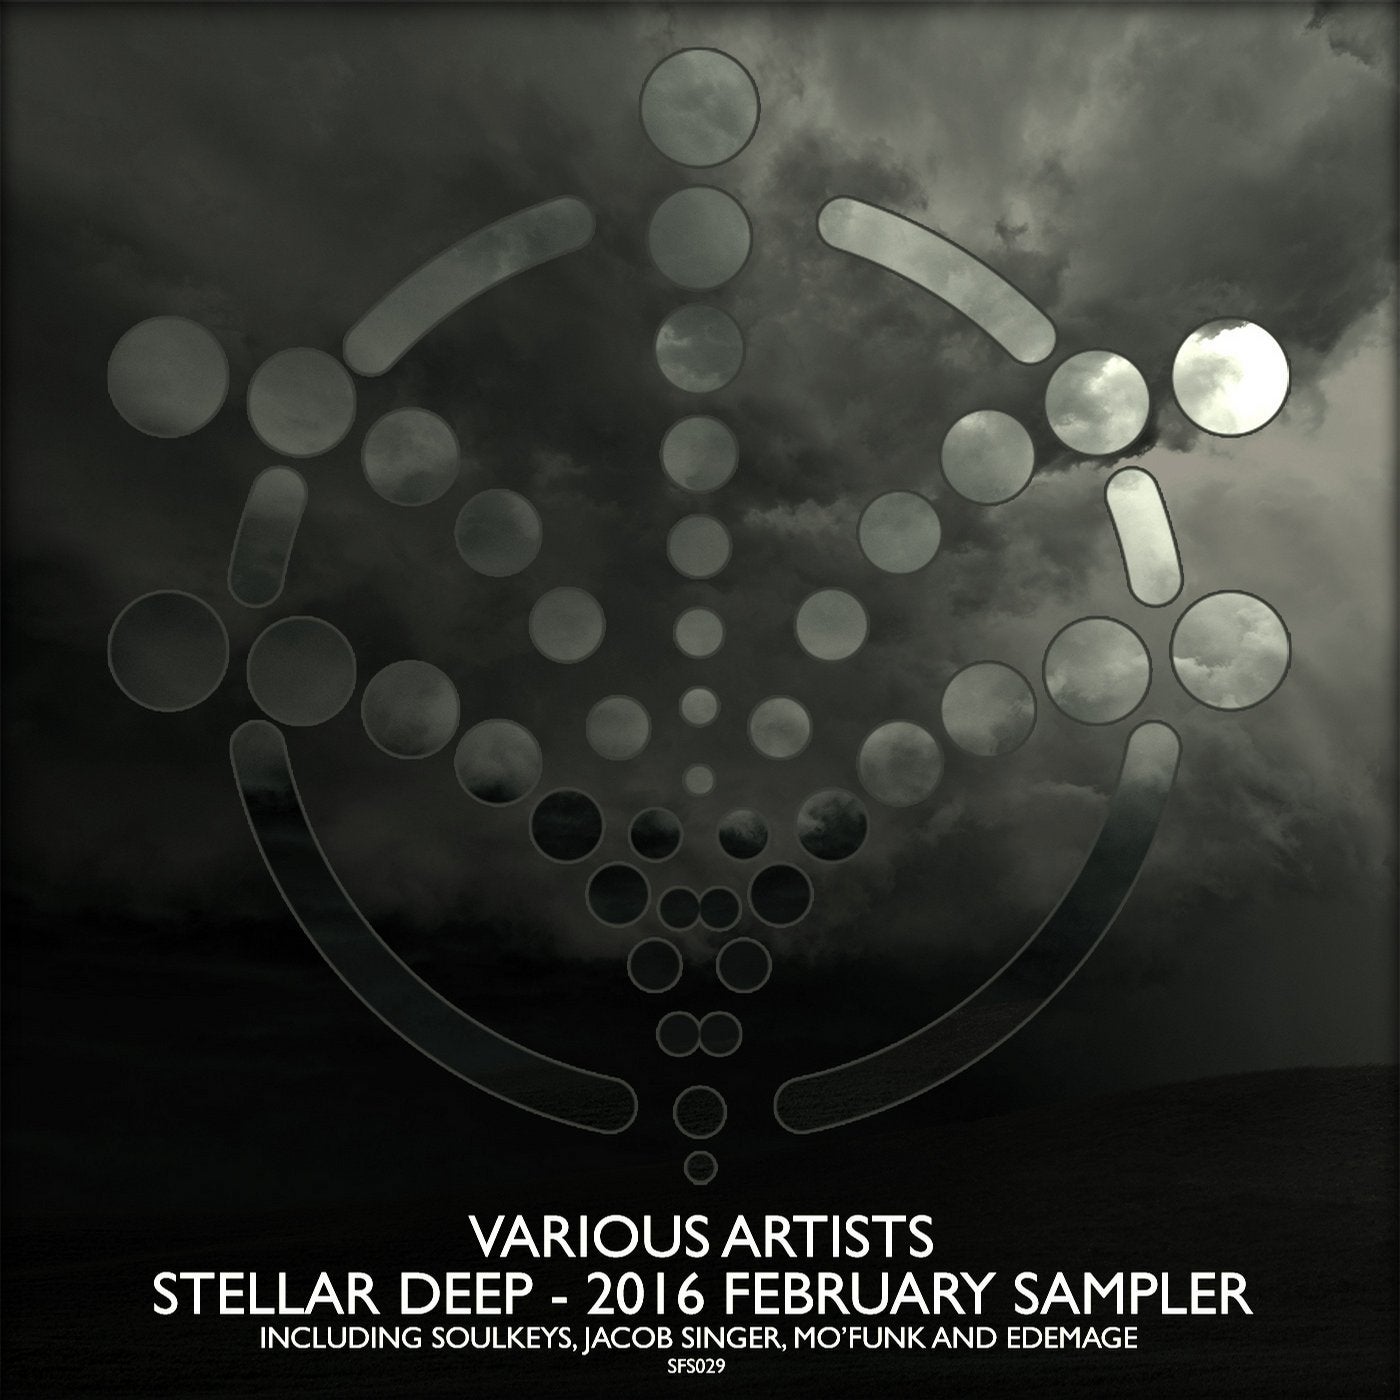 Stellar Deep - 2016 February Sampler